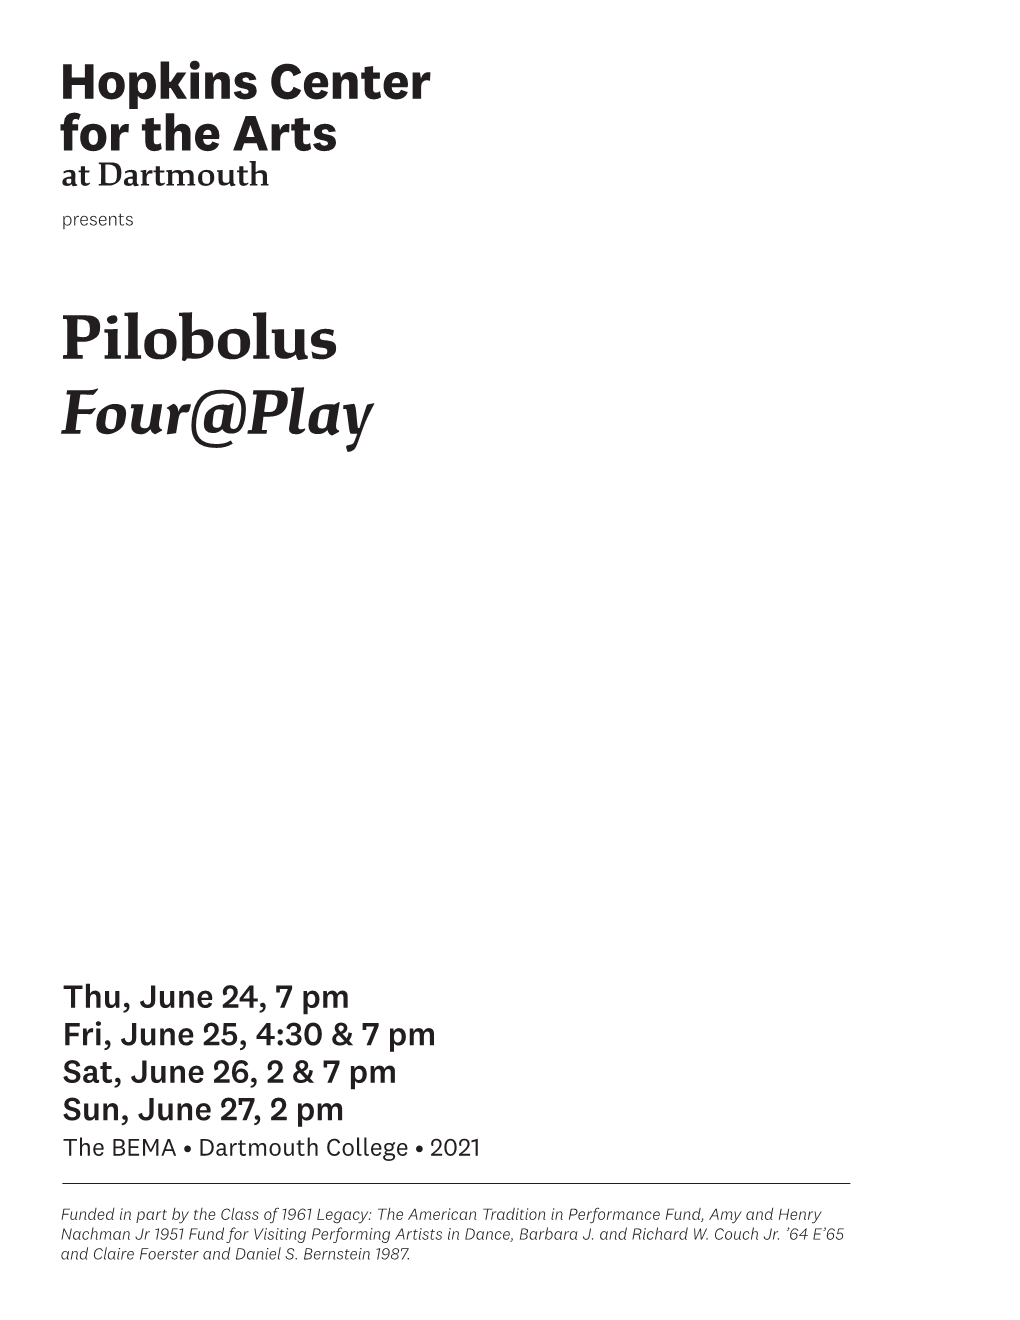 Pilobolus Four@Play